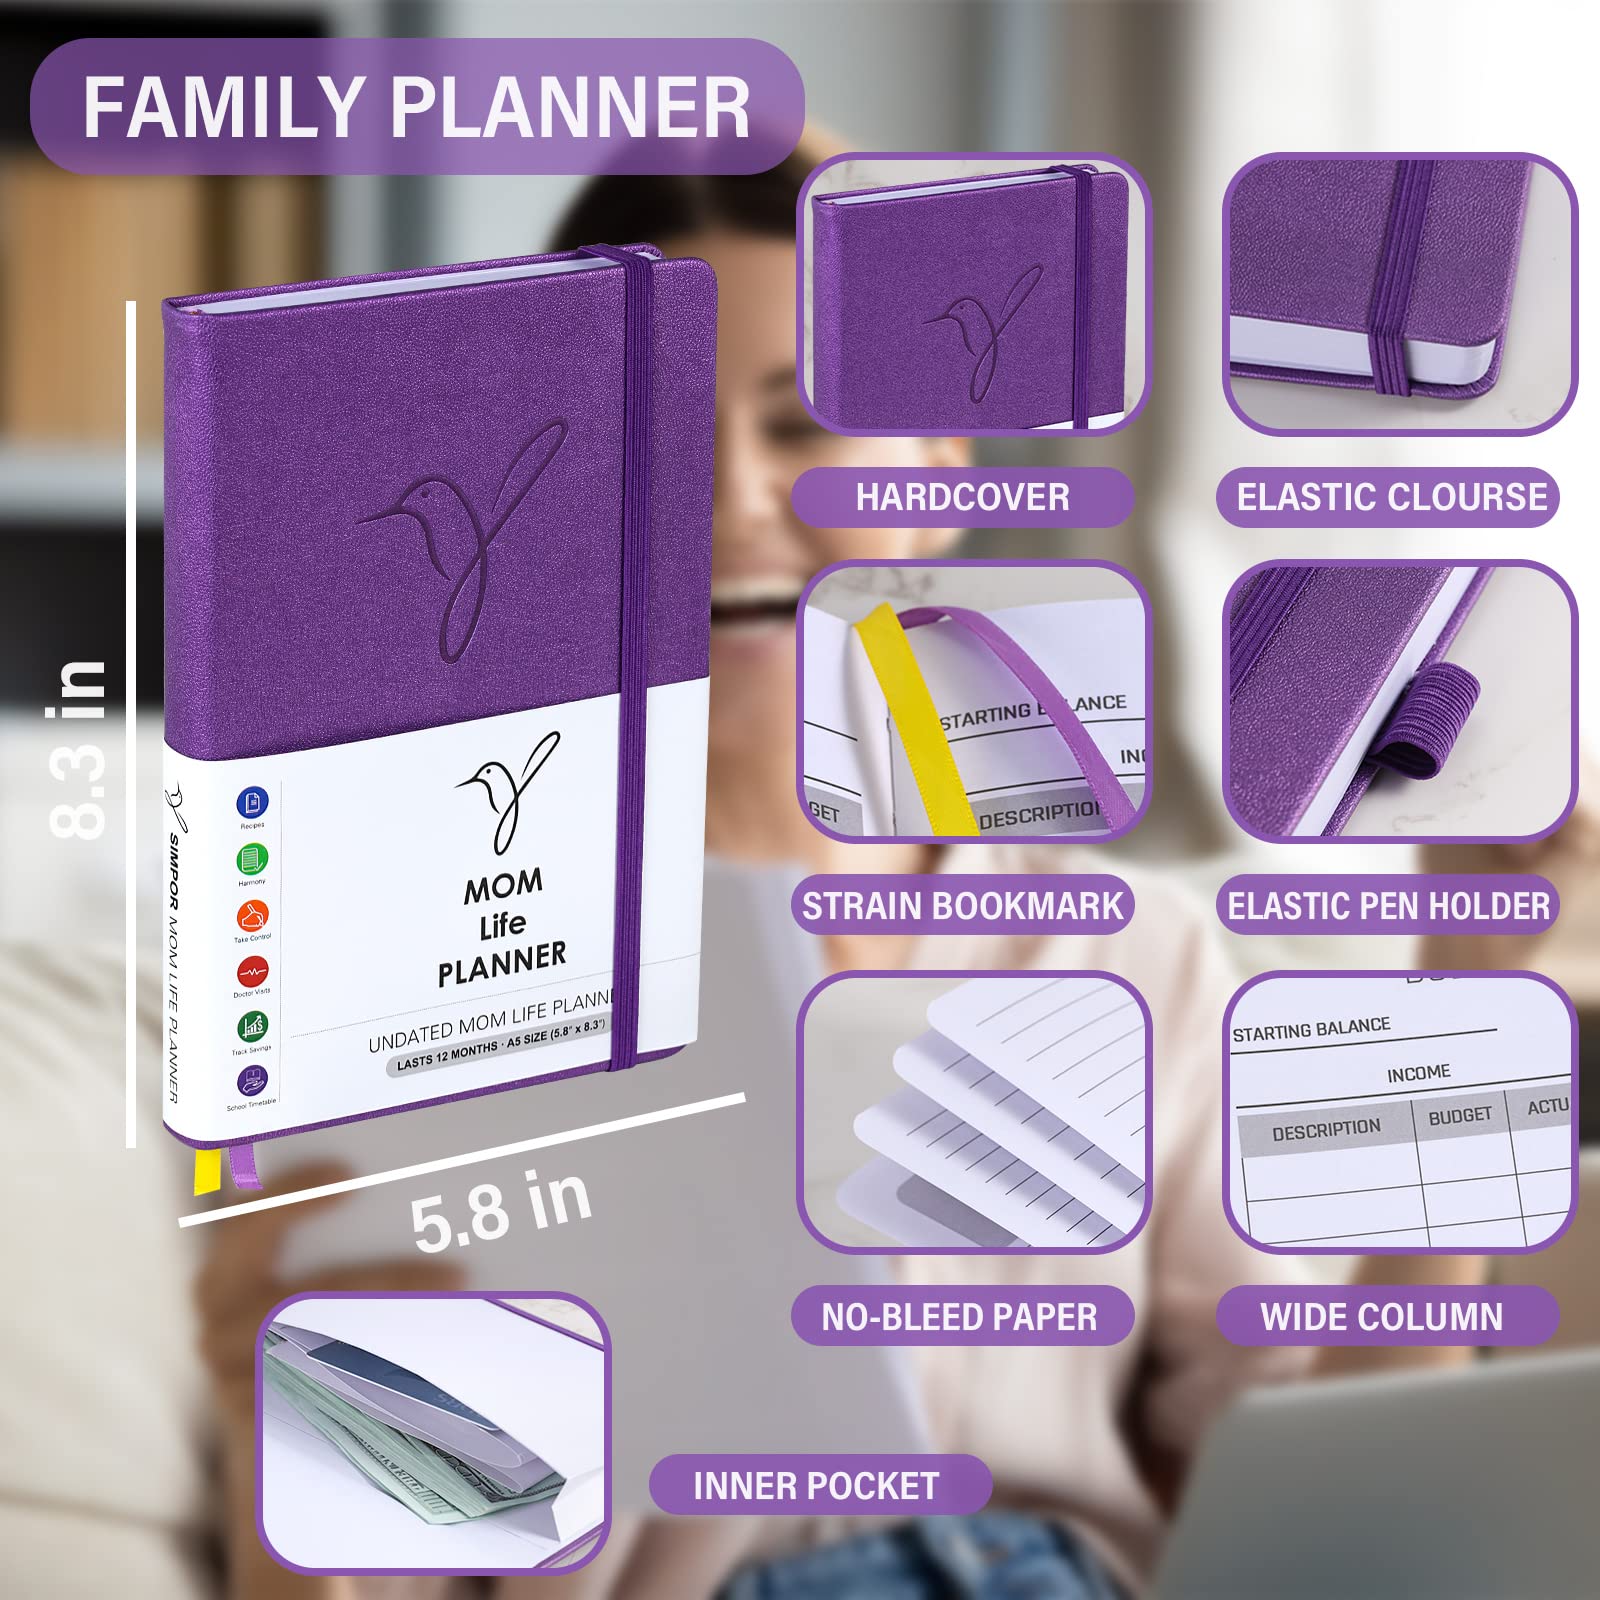 SIMPOR Home Planner, Monthly Financial Planner Organizer Budget Book with Expense Tracker, Work from Home Planner, Meal Planner, Family Organizer, Undated Planner 12 Months Schedule